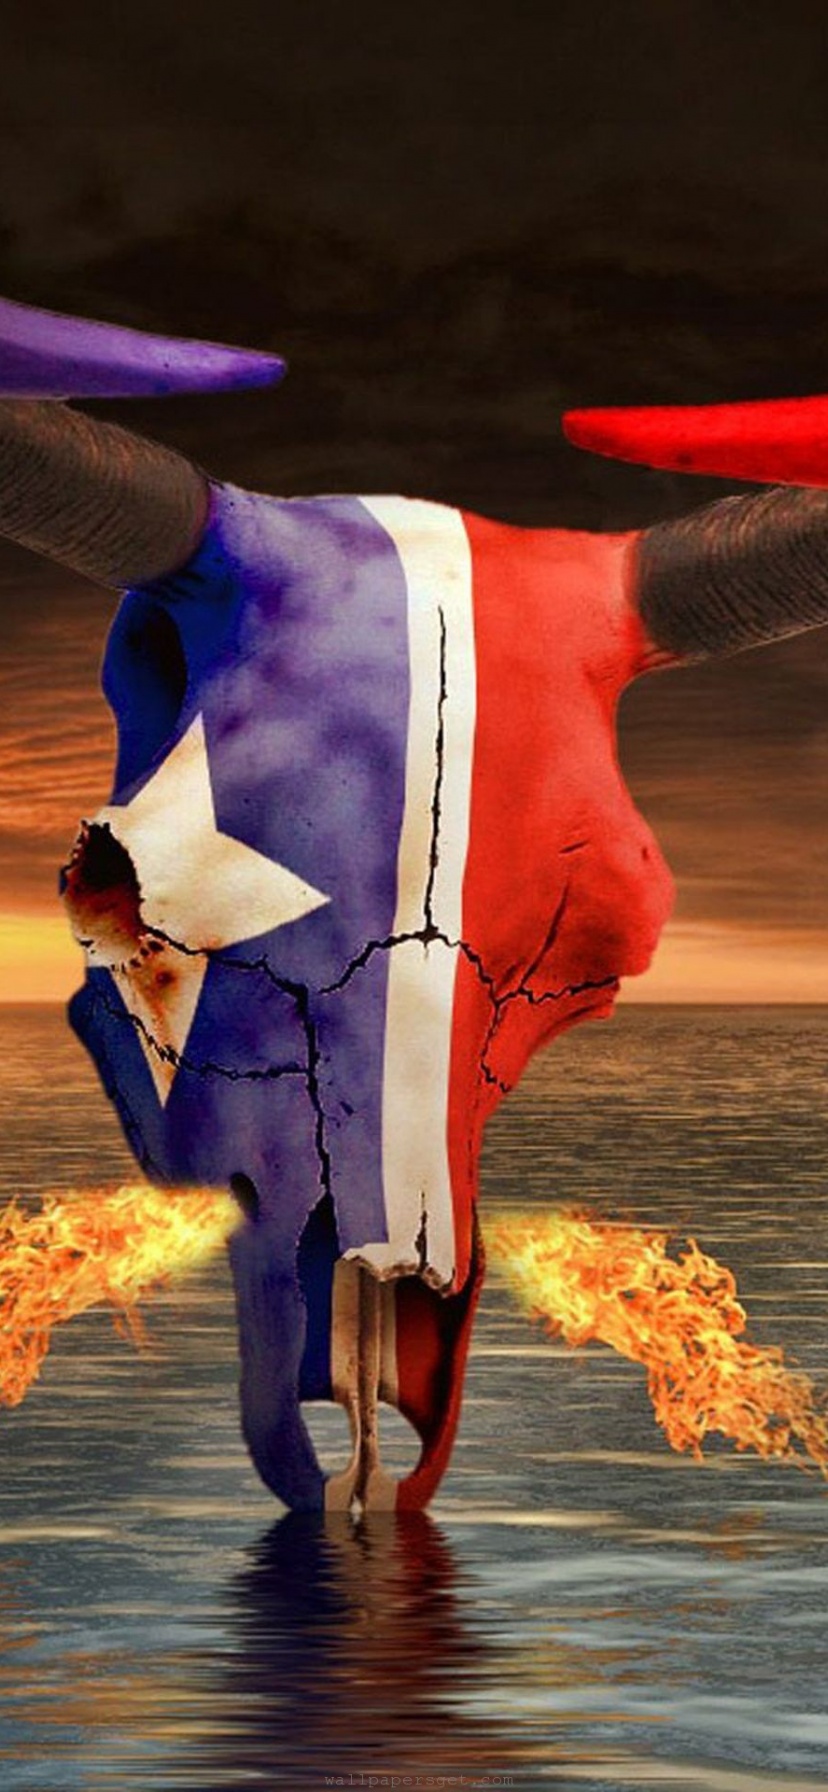 Houston Texans American Football Mascot Toro